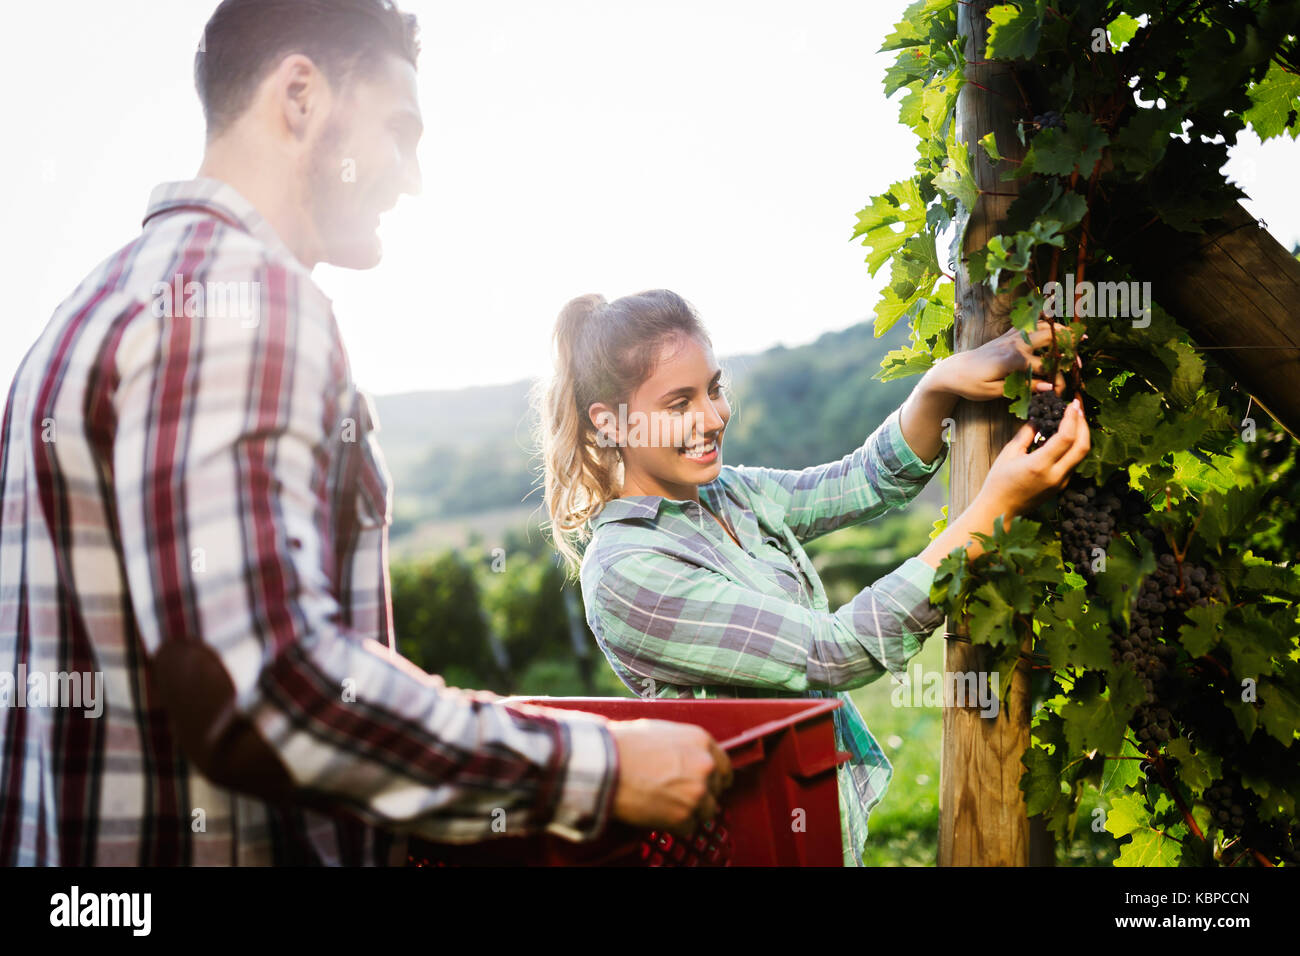 Winegrowers harvesting grapes in vineyard Stock Photo